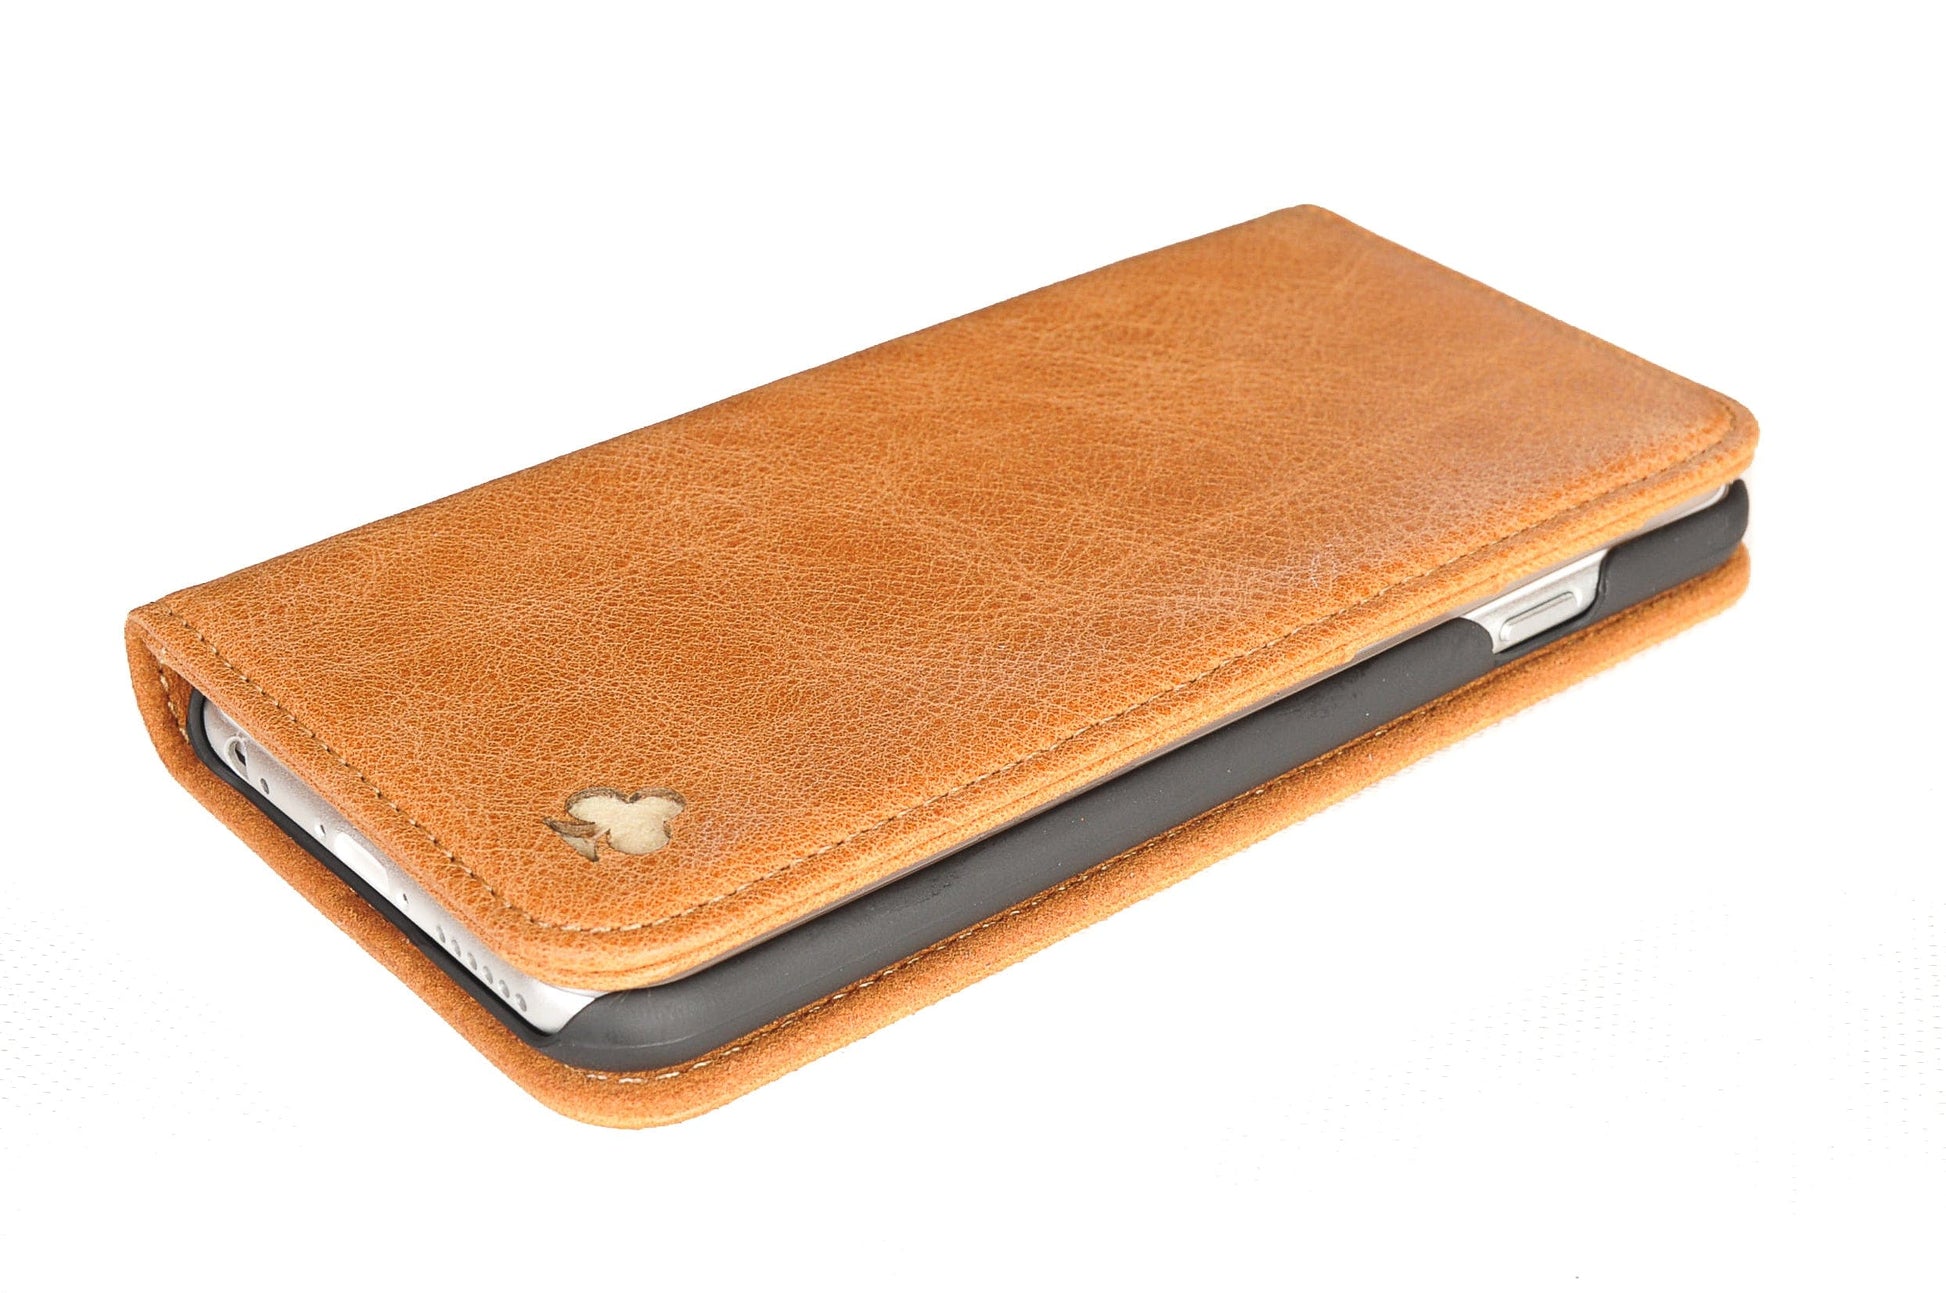 PORTER RILEY - Leather Case for iPhone 13 (6.1). Premium Genuine